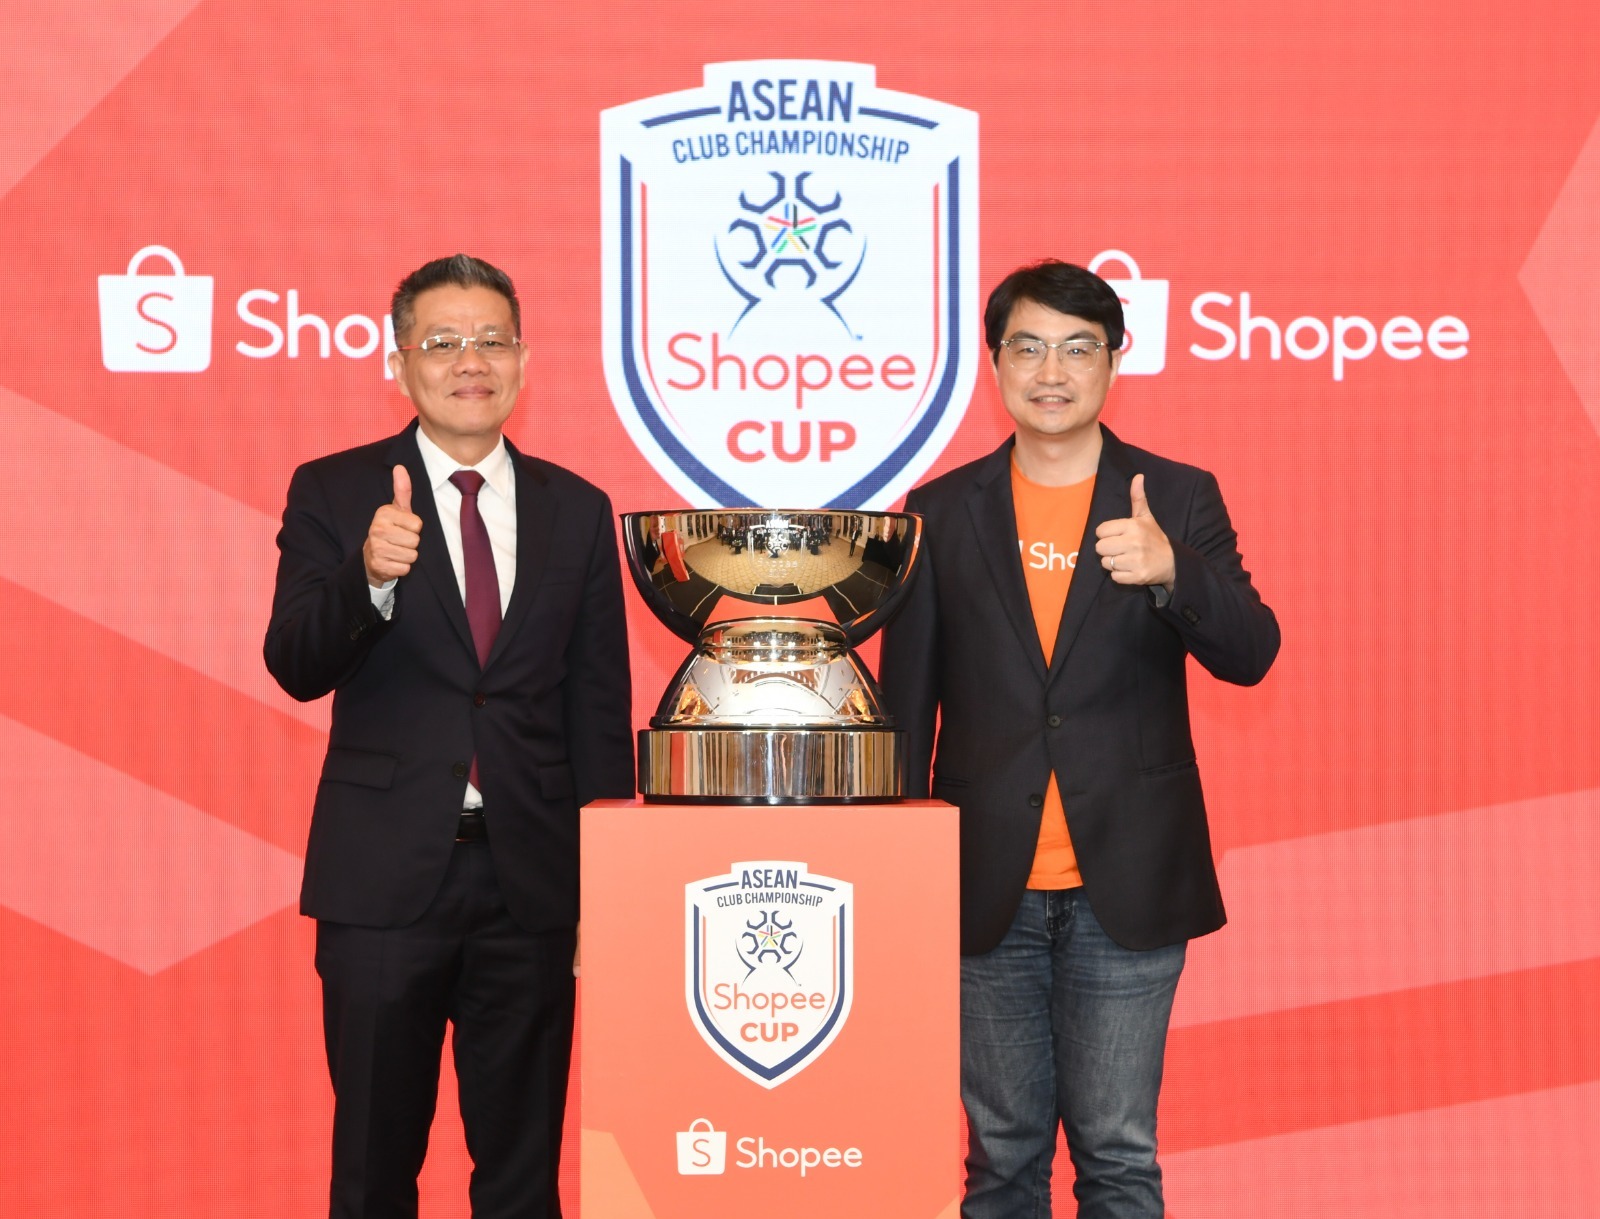 AFF Gandeng Shopee Gelar Shopee Cup Asean Club Championship, Turnamen Antarklub Pertama di Asia Tenggara